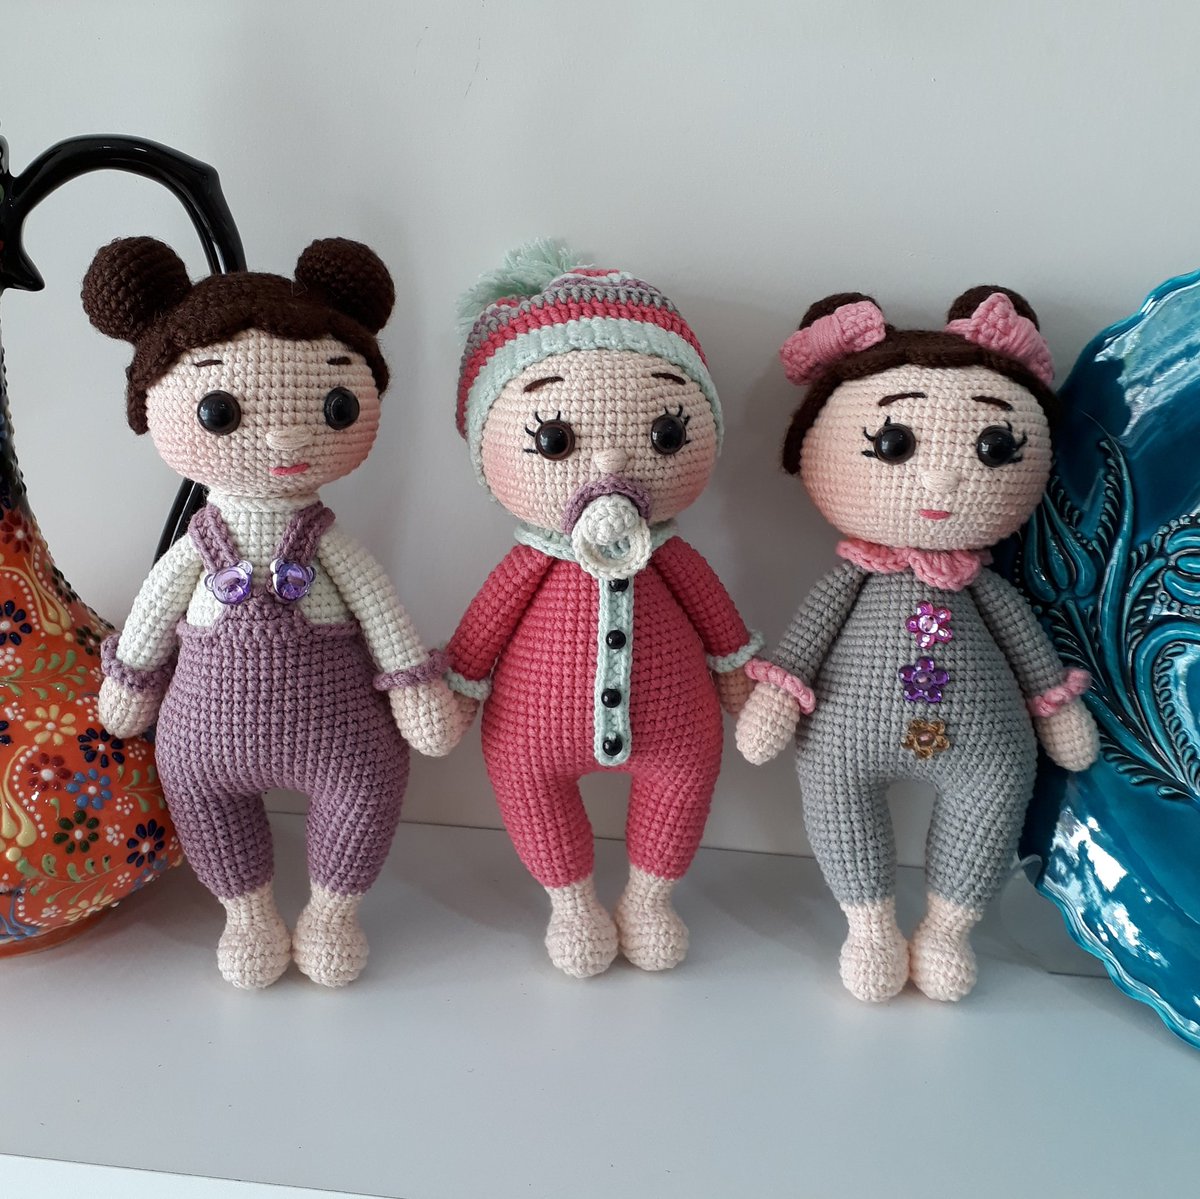 Lovely Crochet Dolls 🎁
#amigurumidoll #amigurumi #amigurumis #amigurumicrochet #crochetworld #crochetdoll #giftforgirlfriend #giftforbabygirl #giftforkids #nursery #nurserydecor #giftforbabygirl #healtytoys #stuffeddoll #knitteddoll #huggable #birthdaygifts #goodday #saturday